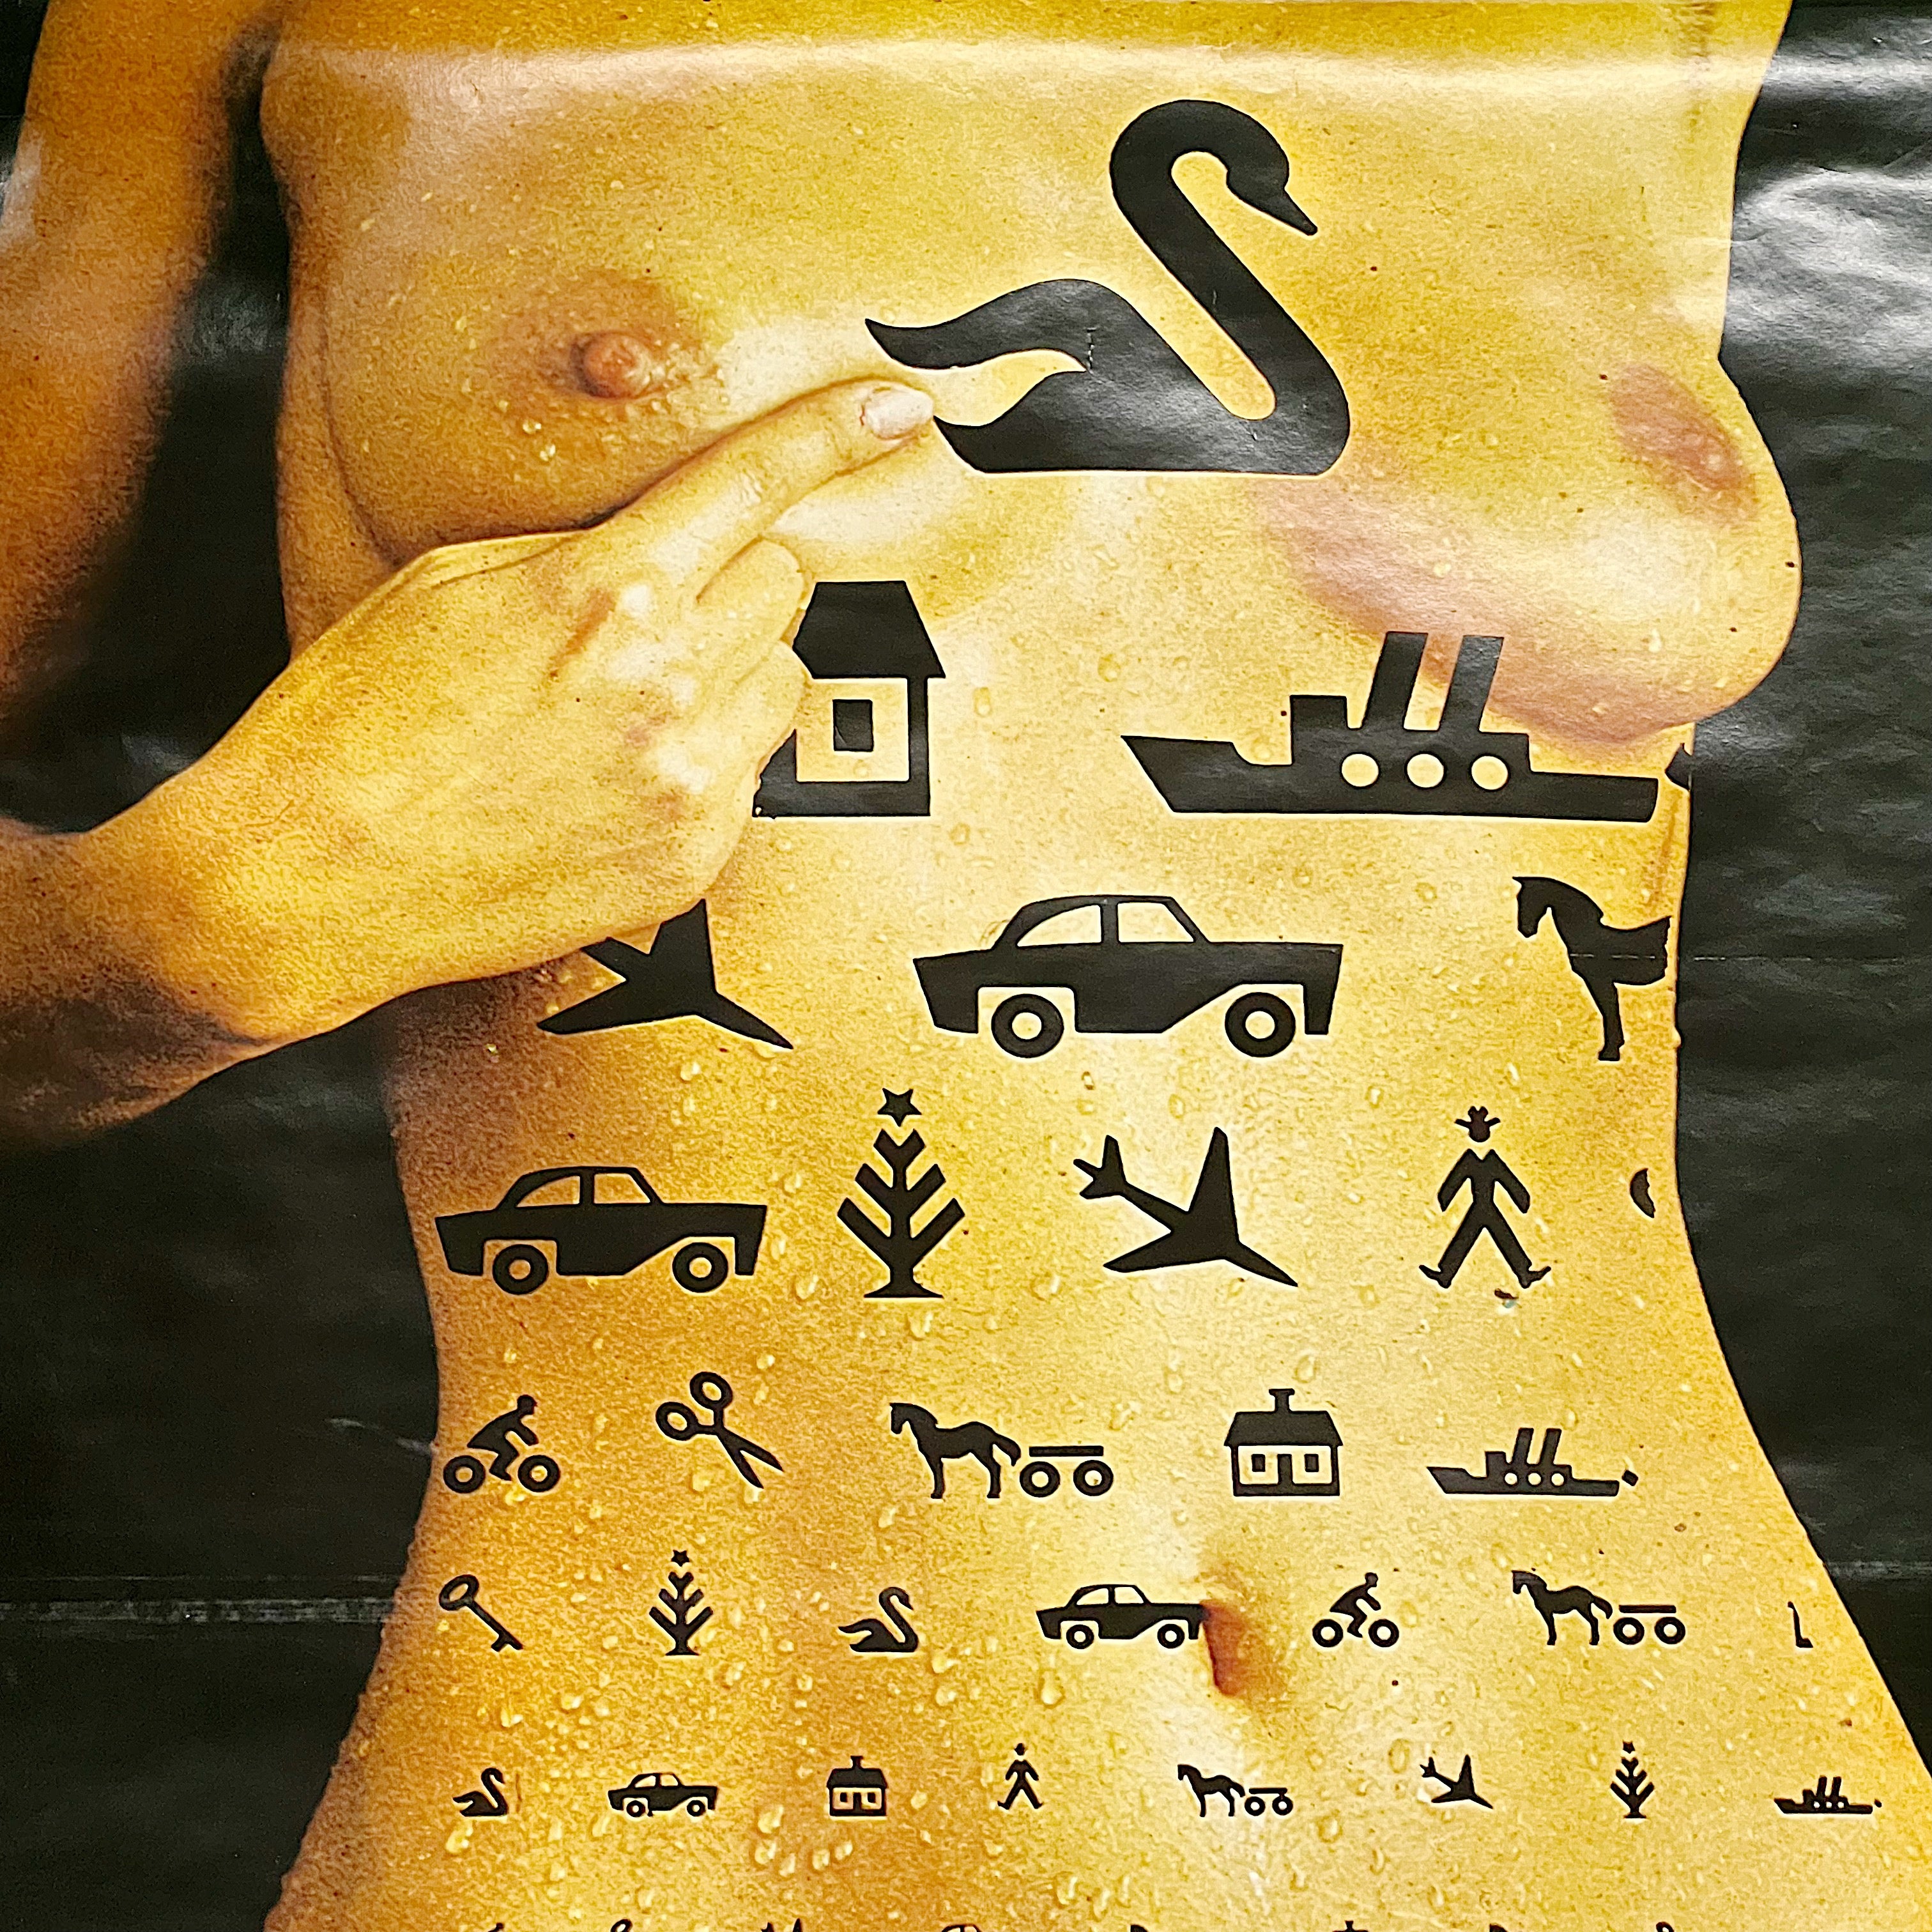 Rare 1970s Danish Poster of Nude Woman | Black Tattoos